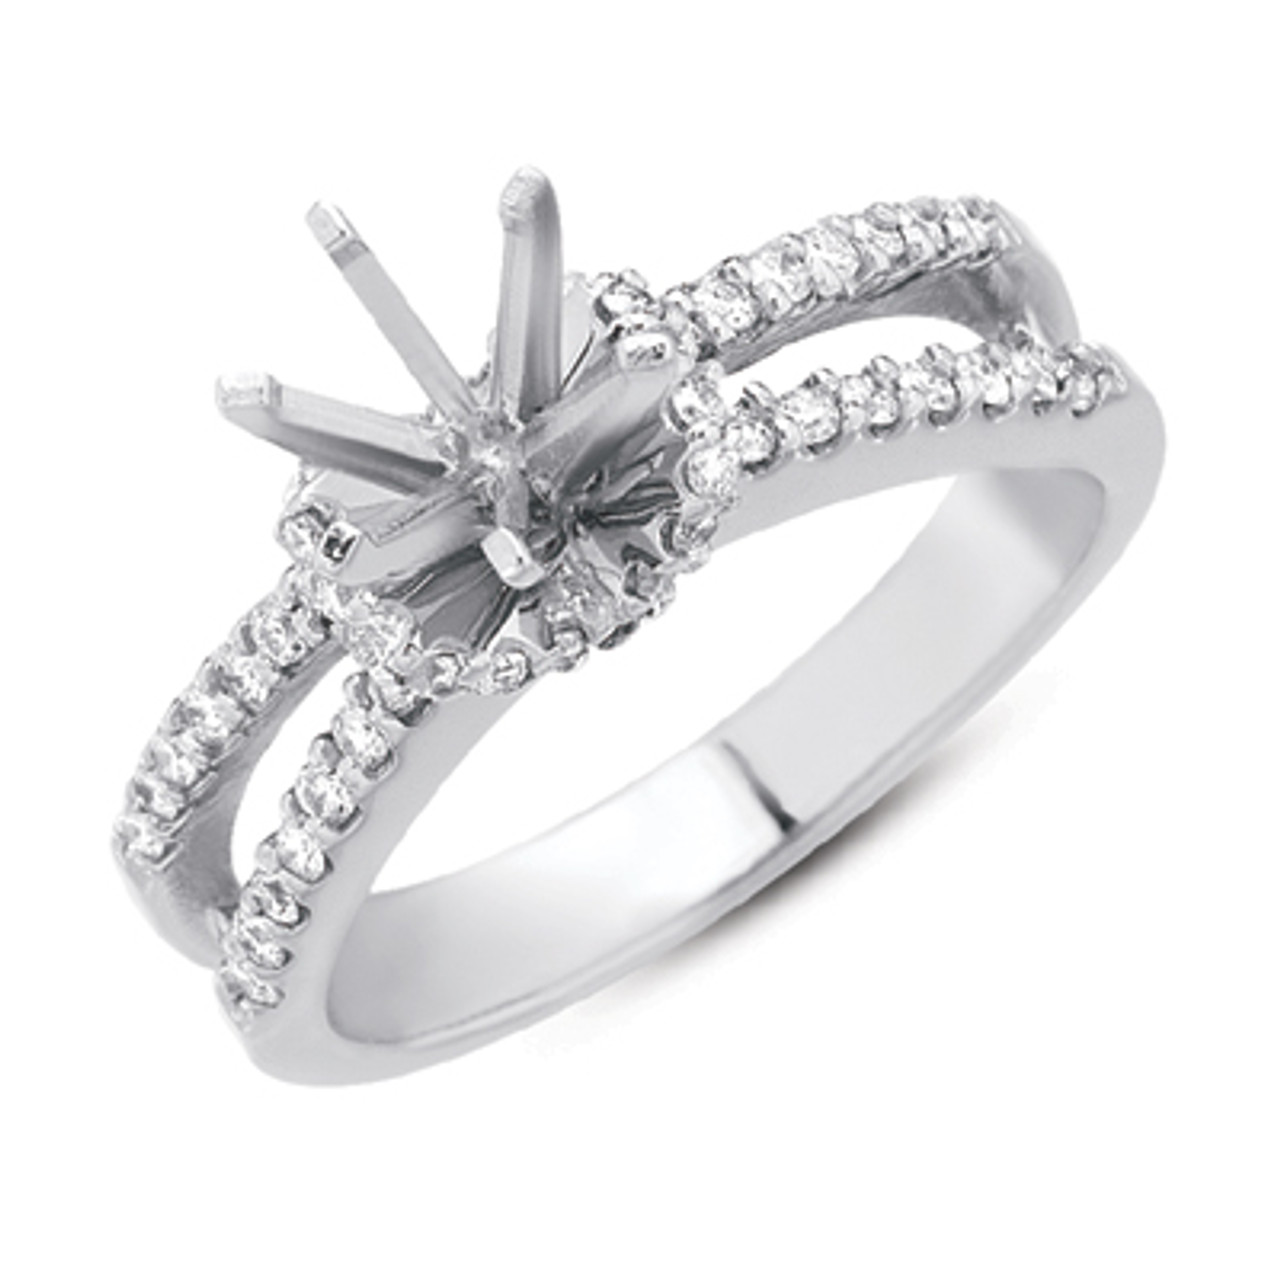 Select 950 Palladium Wedding Rings | Glamira.com.au